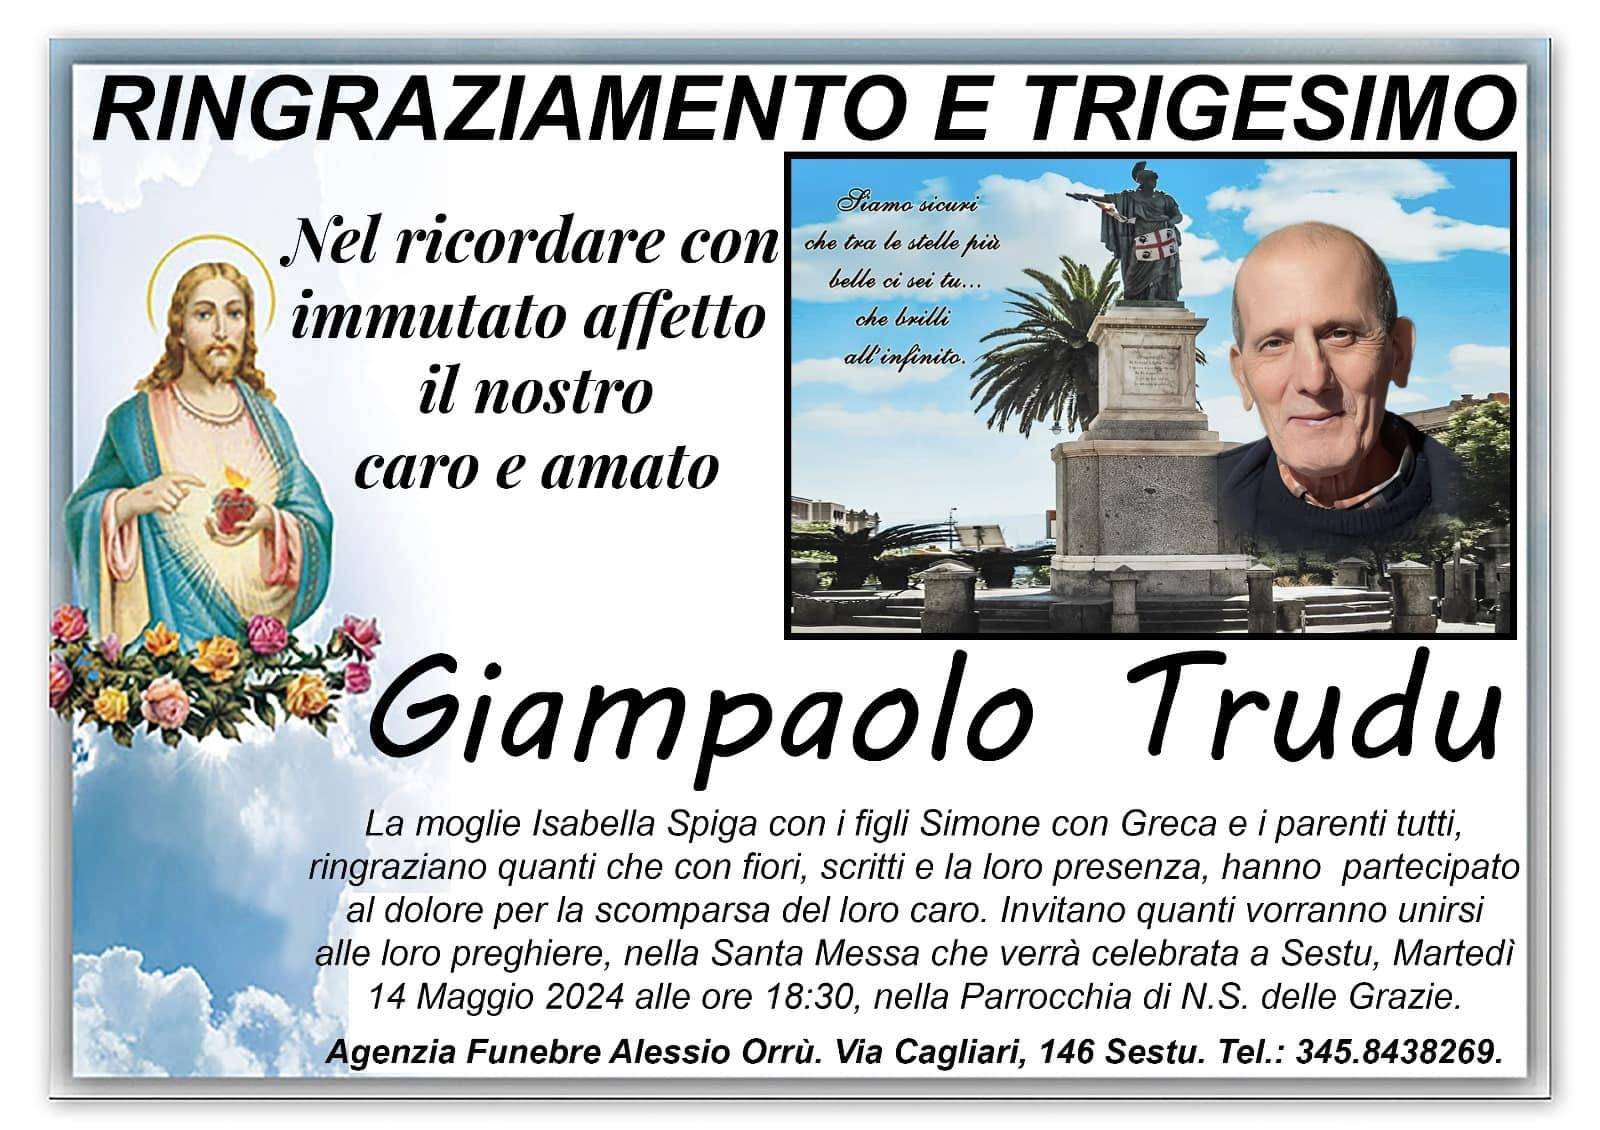 Giampaolo Trudu